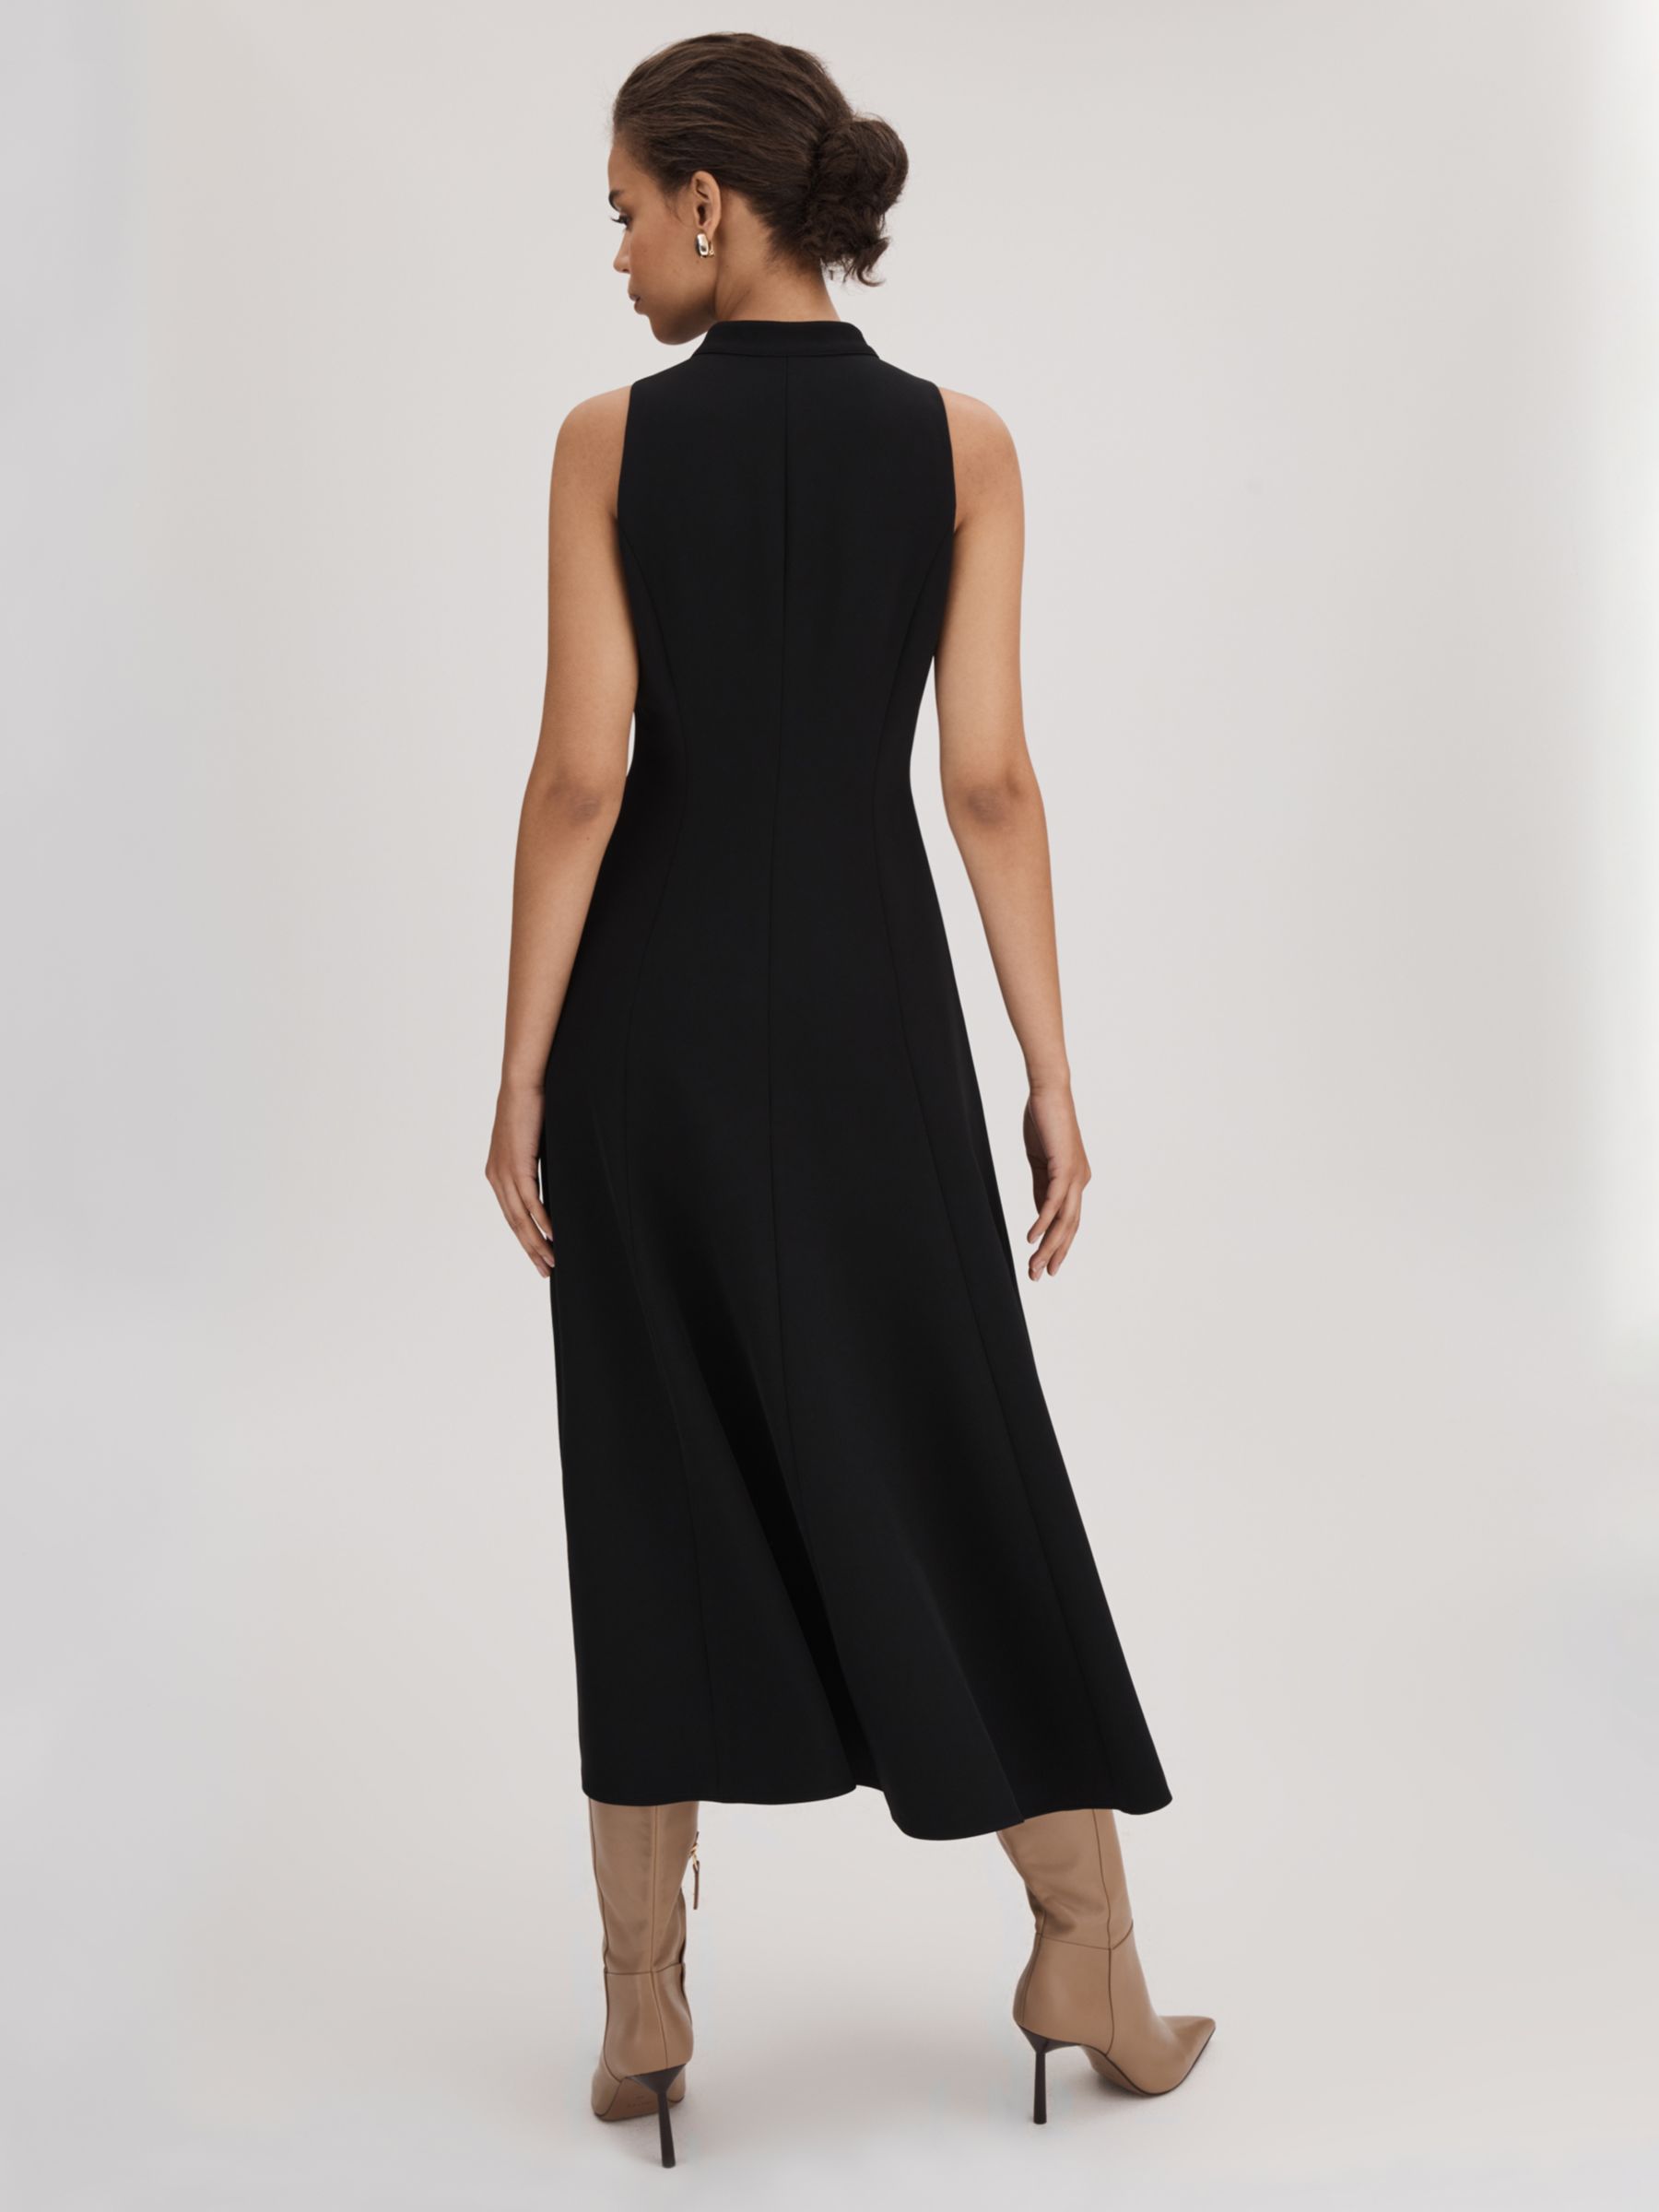 FLORERE Zip Front Midi Dress, Black, 12